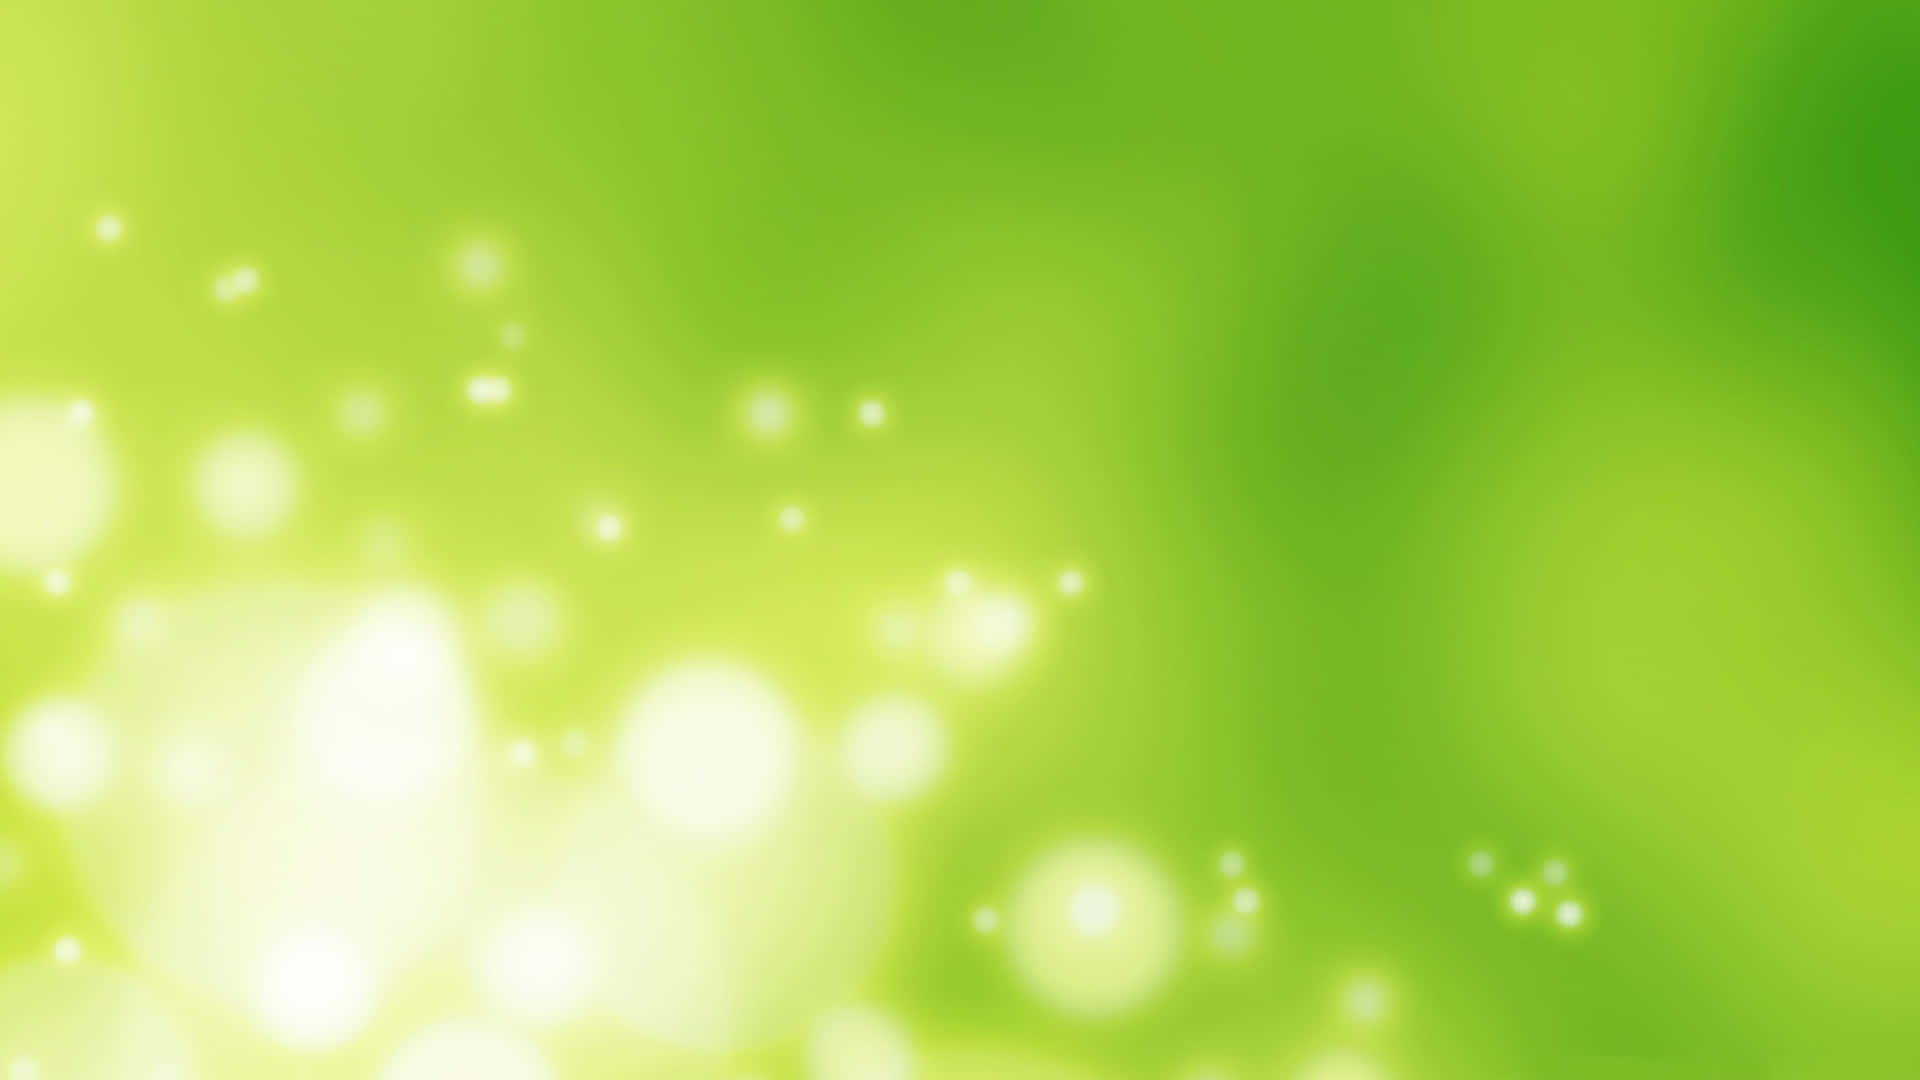 Bokeh Effects On Gradient Light Green Background